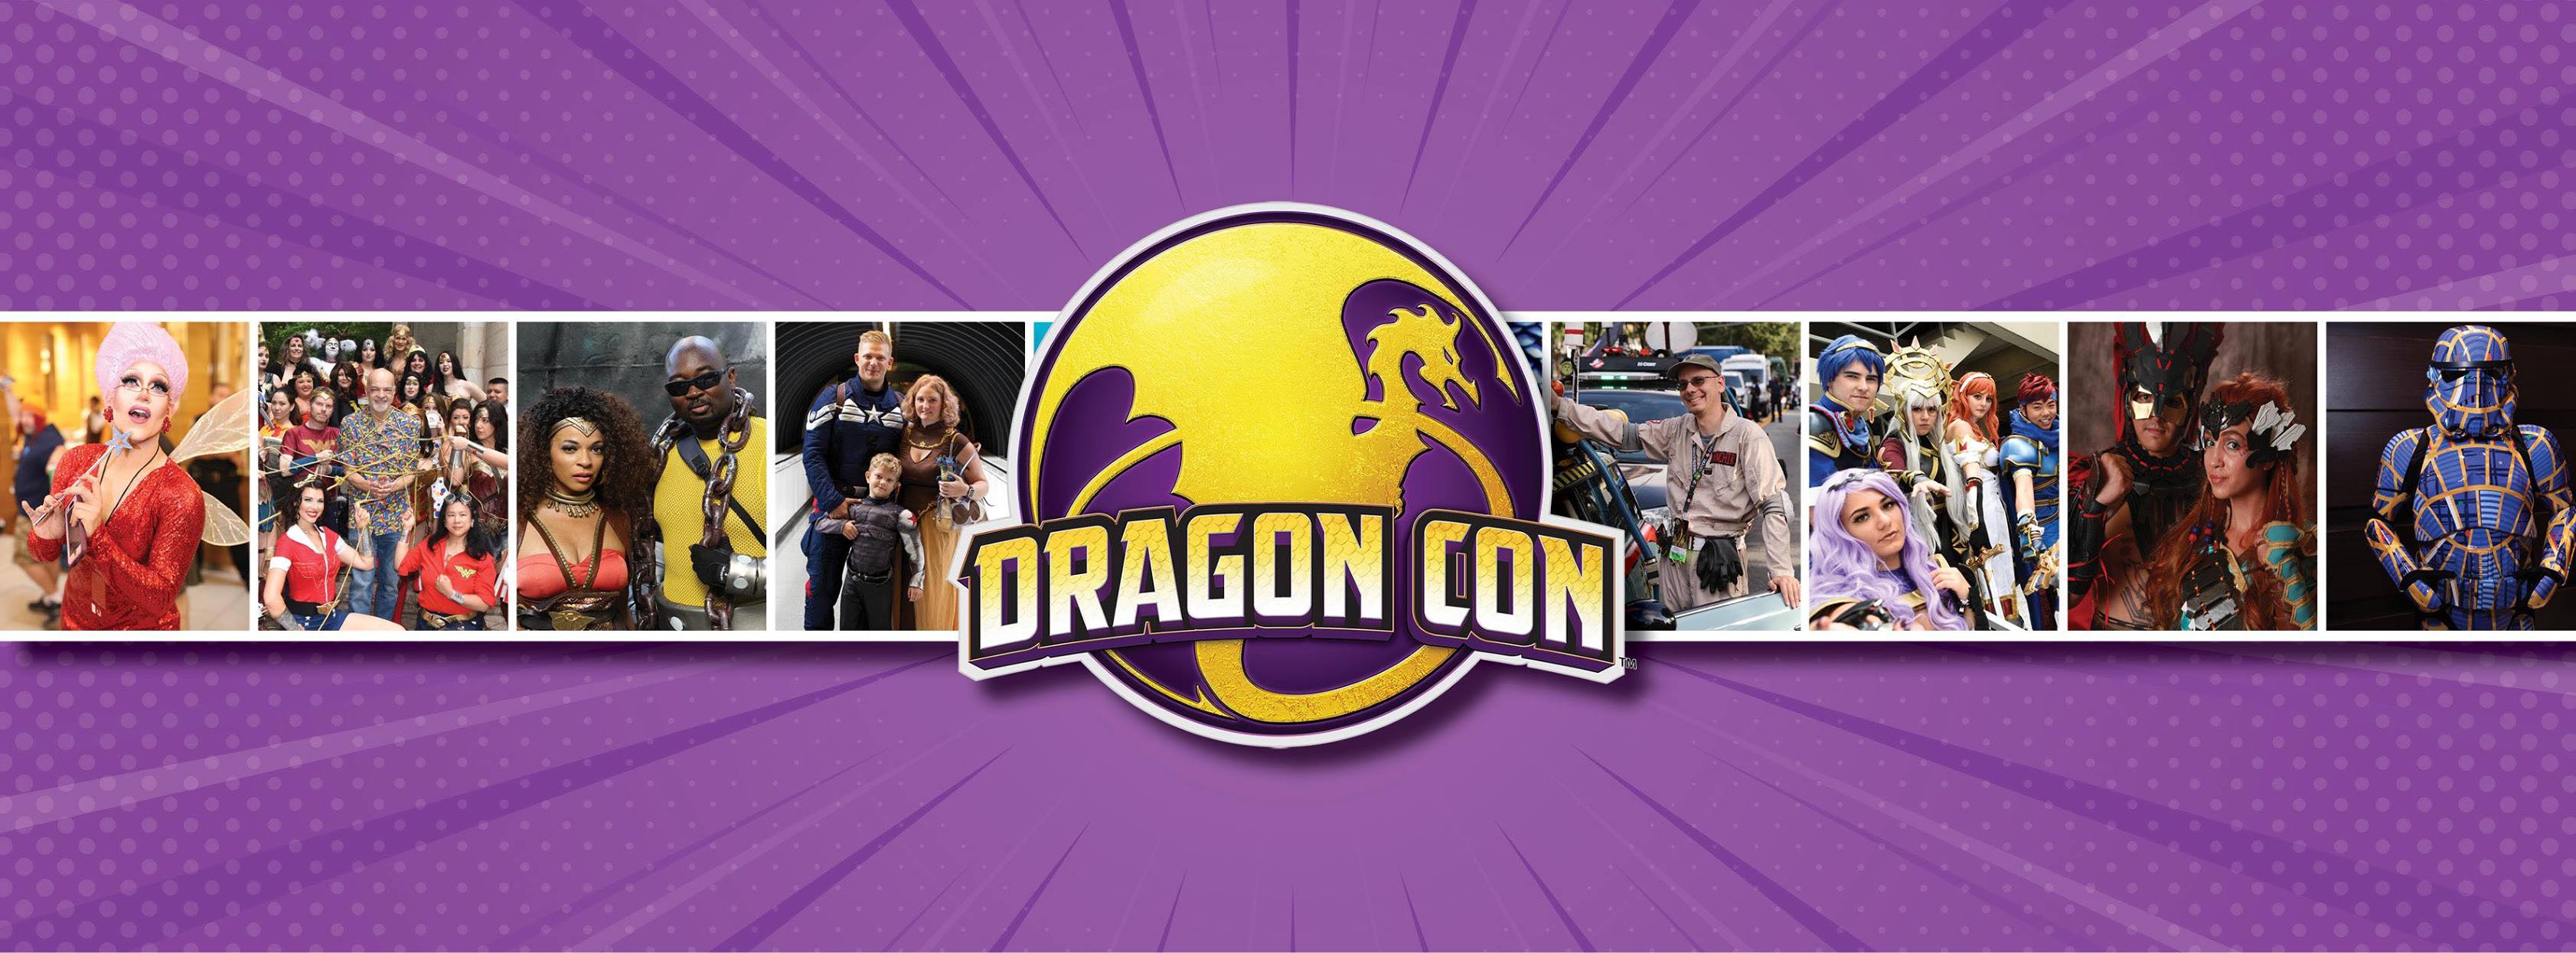 DragonCon banner